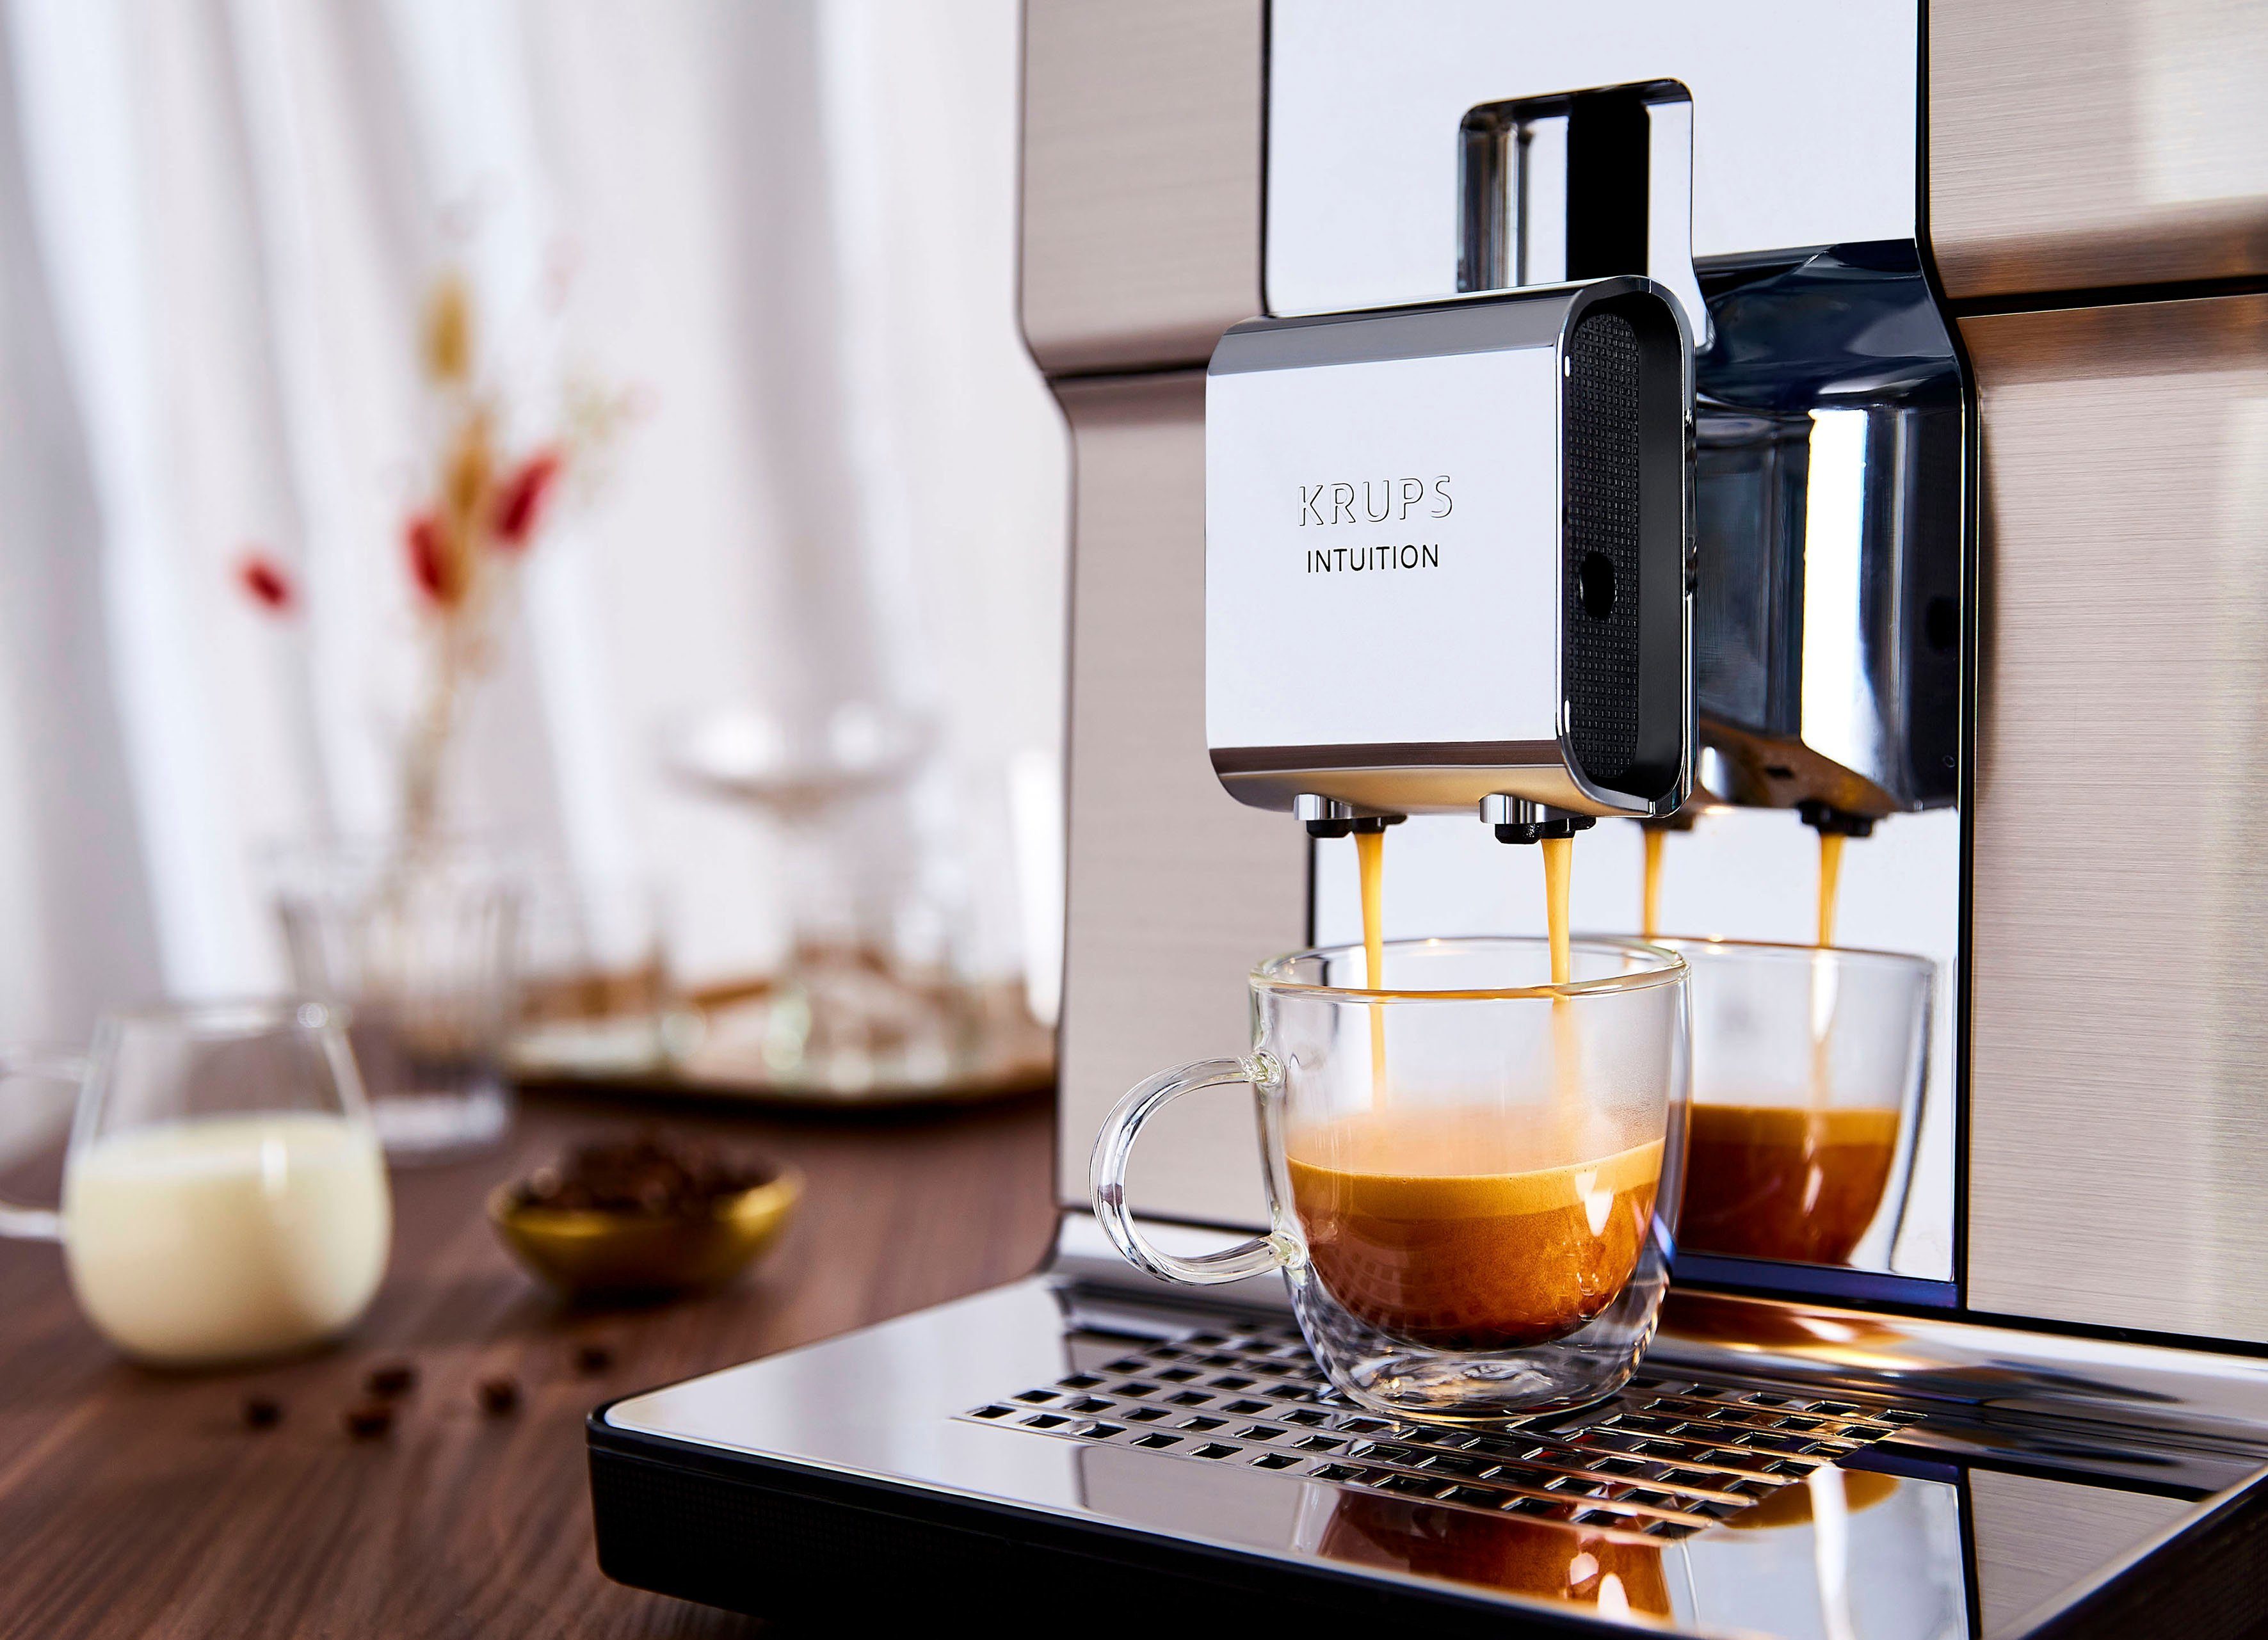 Kaffeevollautomat EA877D geräuscharm, Farb-Touchscreen 21 Krups Heiß- und Kaltgetränke-Spezialitäten, Experience+, Intuition